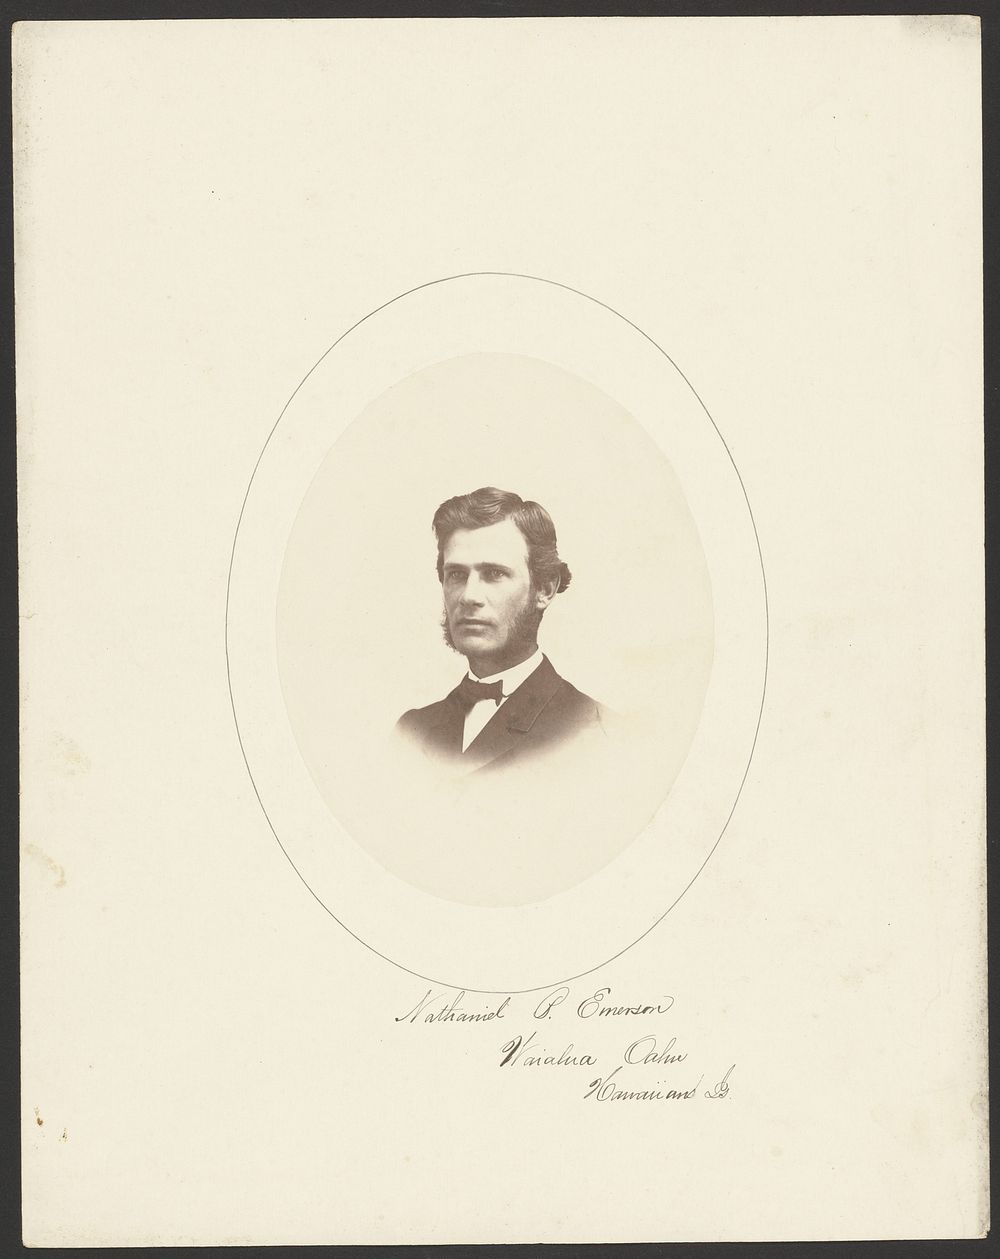 Nathaniel B. Emerson by George Kendall Warren